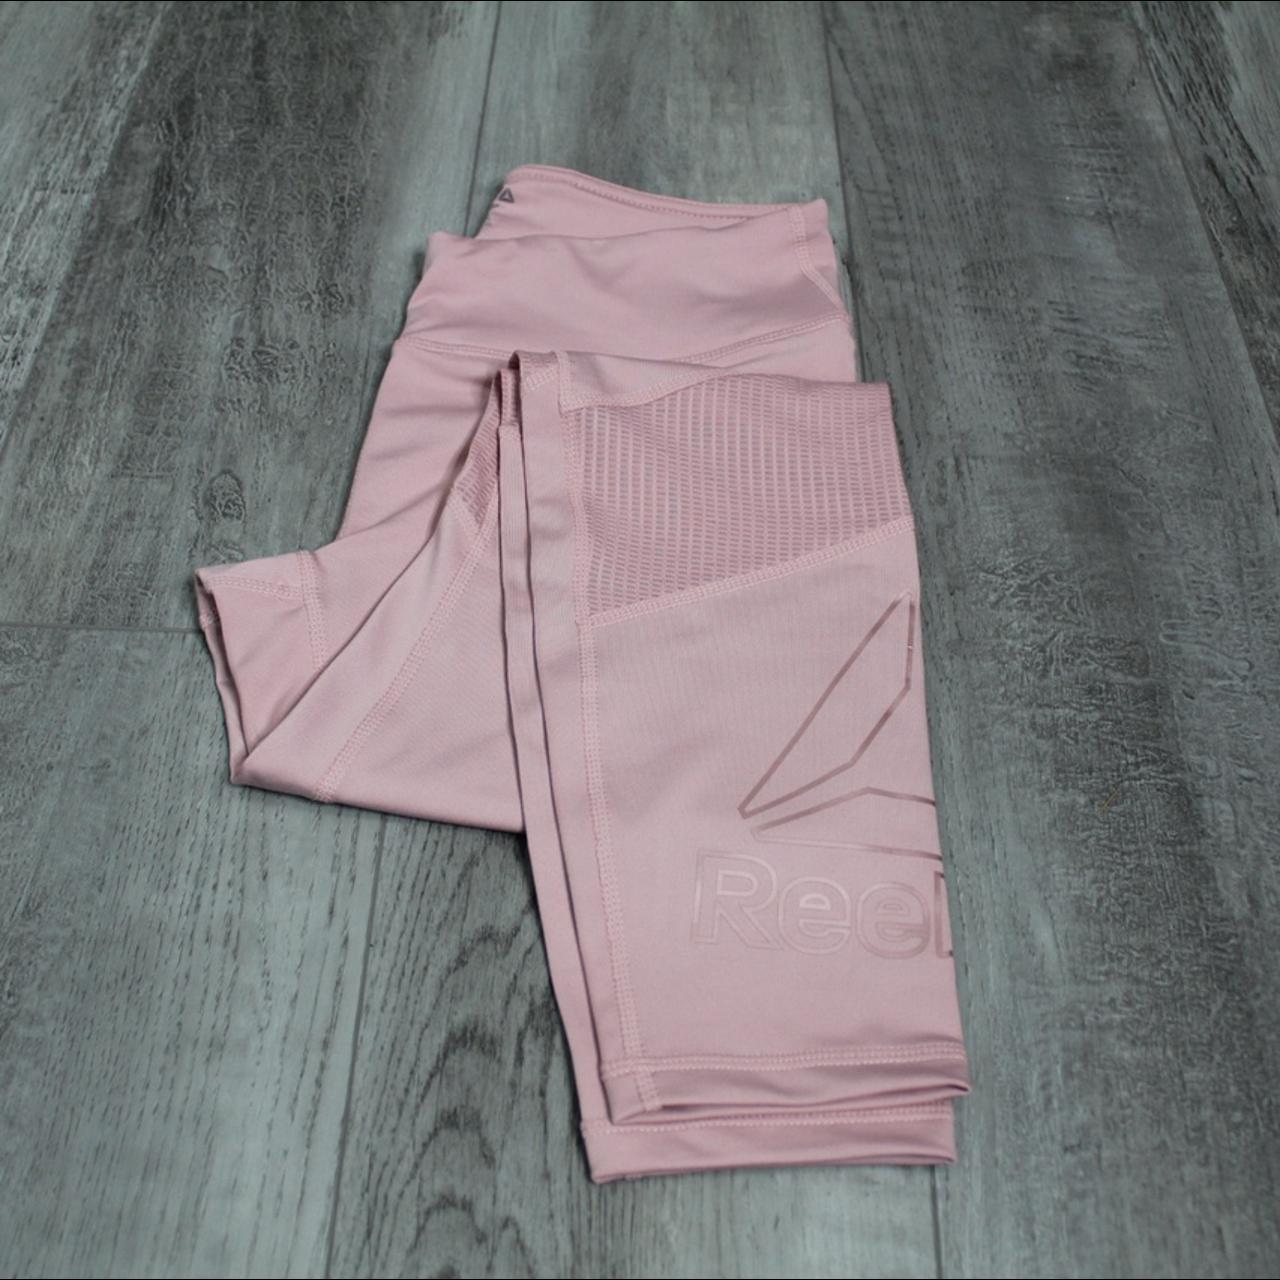 💕Reebok pink leggings 💕 size small never worn mesh... - Depop